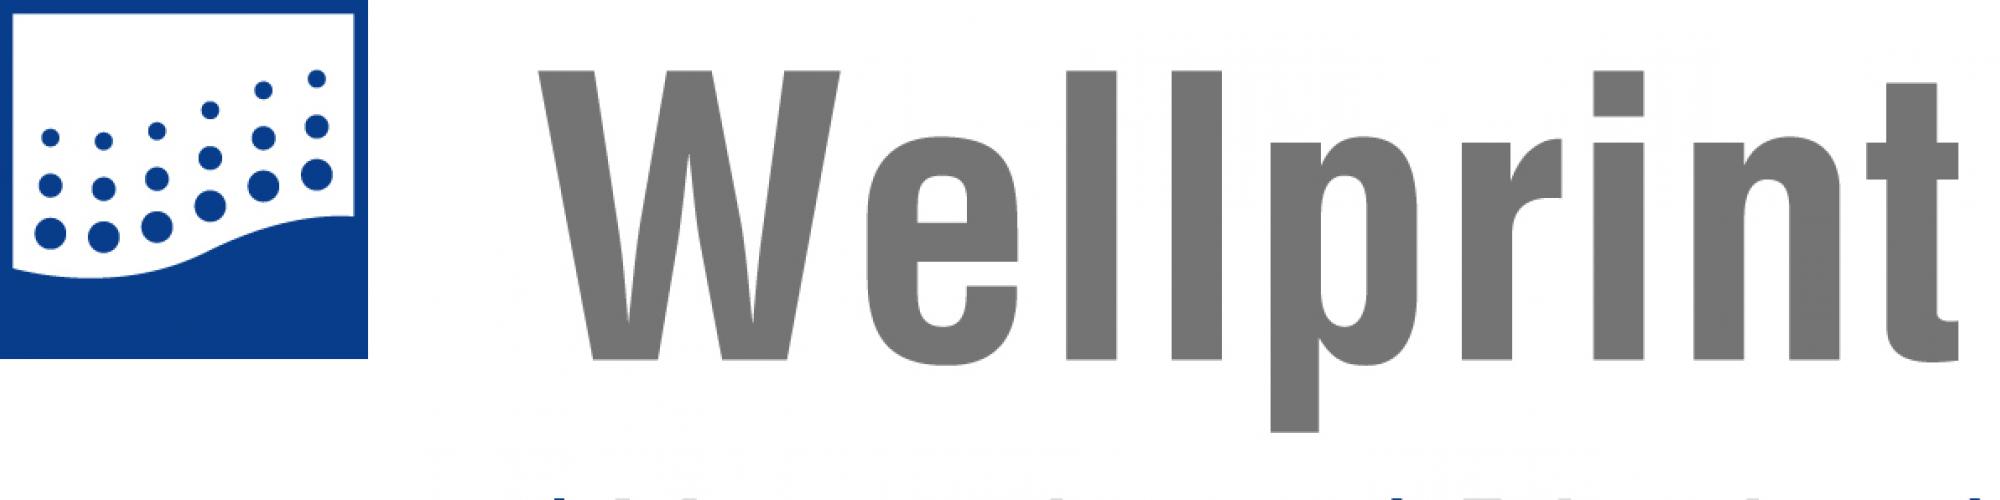 Wellprint GmbH & Co. KG